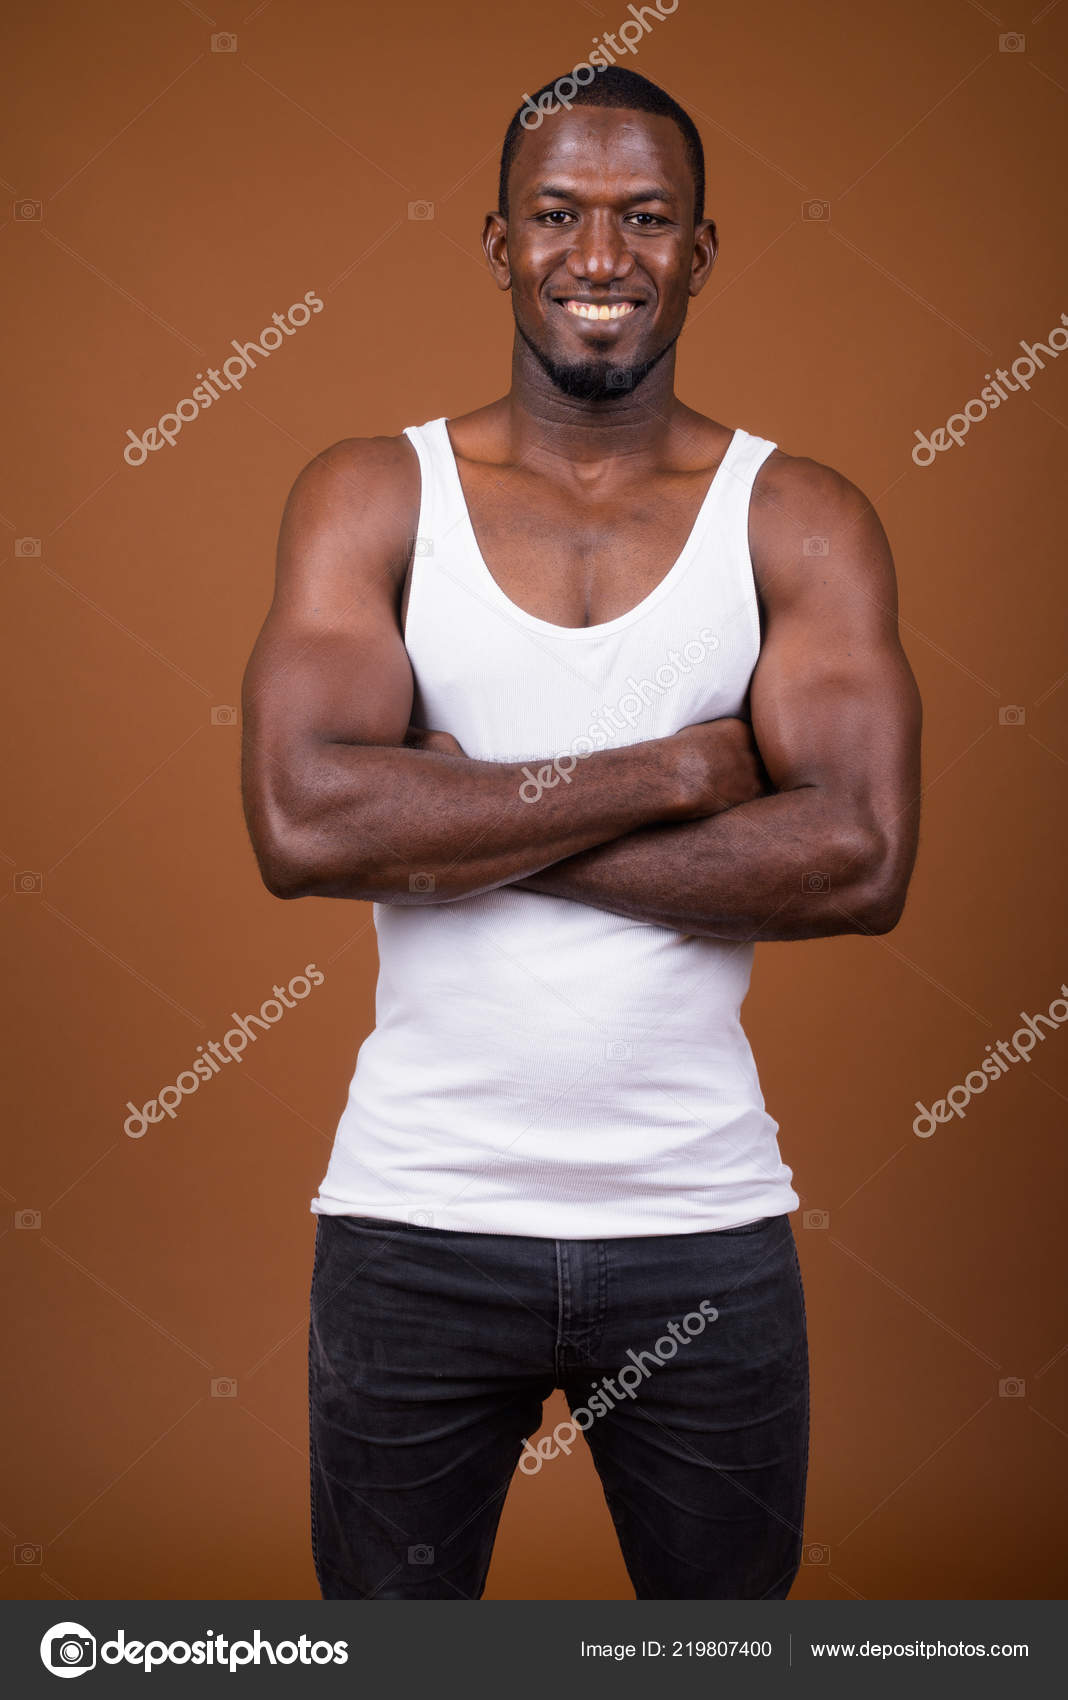 https://st4.depositphotos.com/10313122/21980/i/1600/depositphotos_219807400-stock-photo-handsome-muscular-african-man-against.jpg